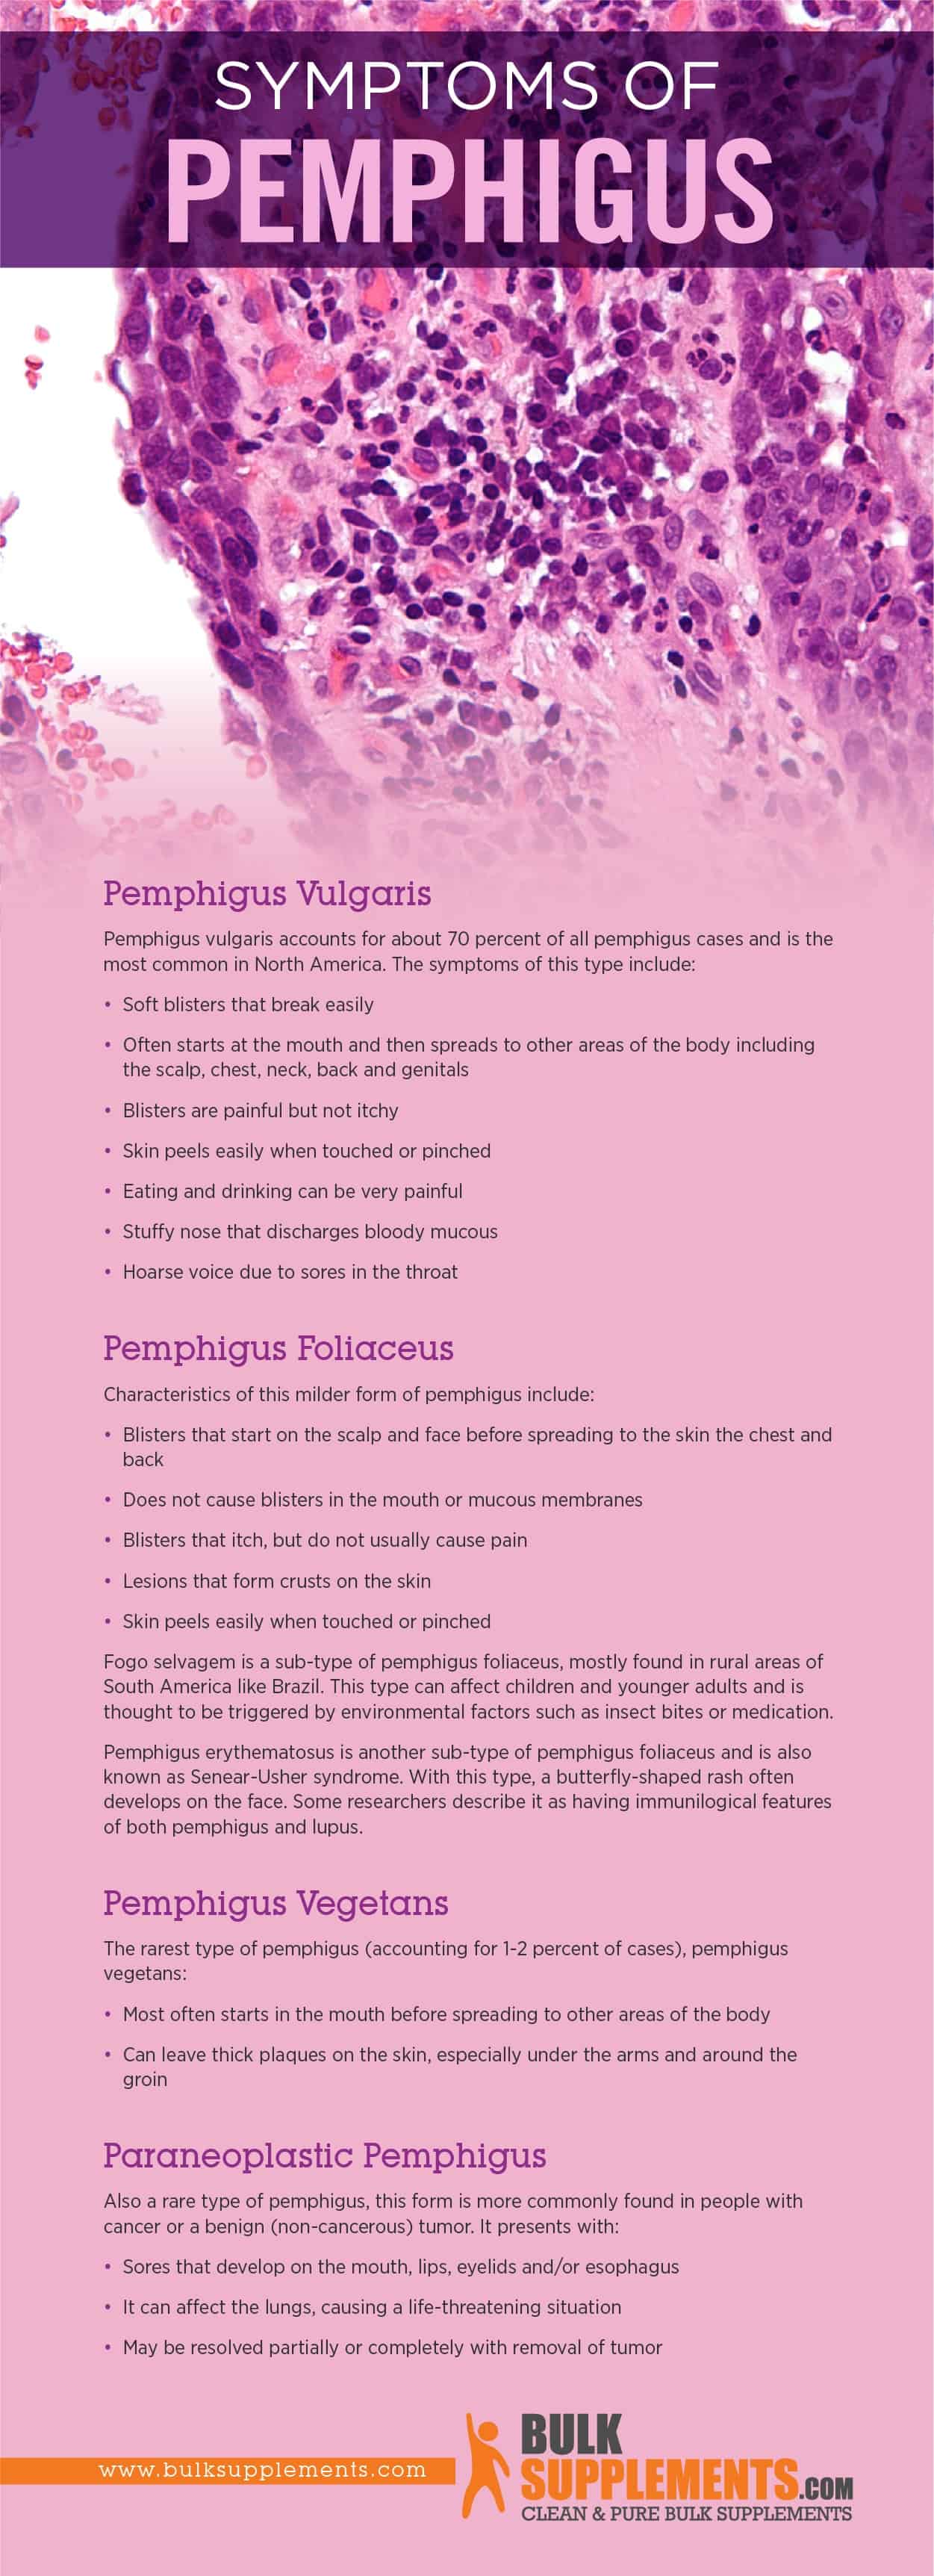 Symptoms of Pemphigus